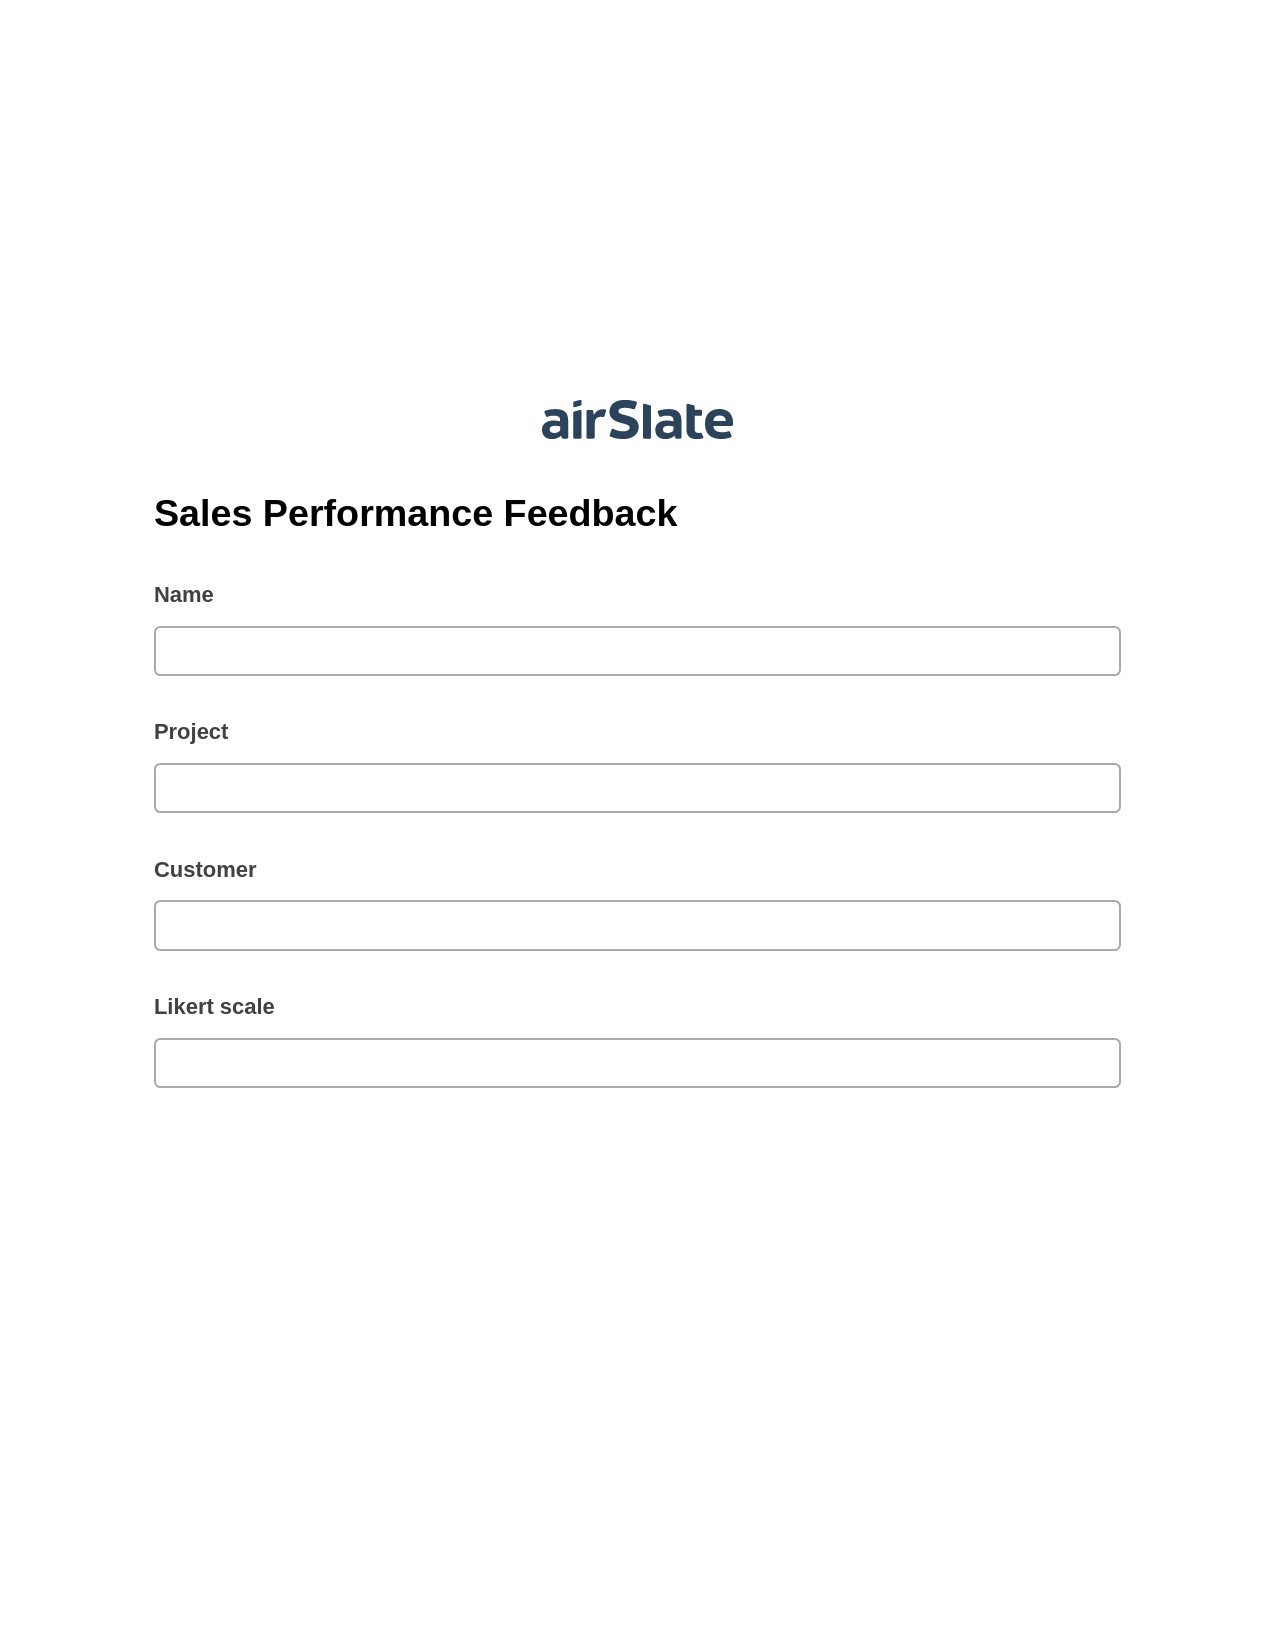 Multirole Sales Performance Feedback Pre-fill Slate from MS Dynamics 365 Records Bot, Audit Trail Bot, Webhook Postfinish Bot